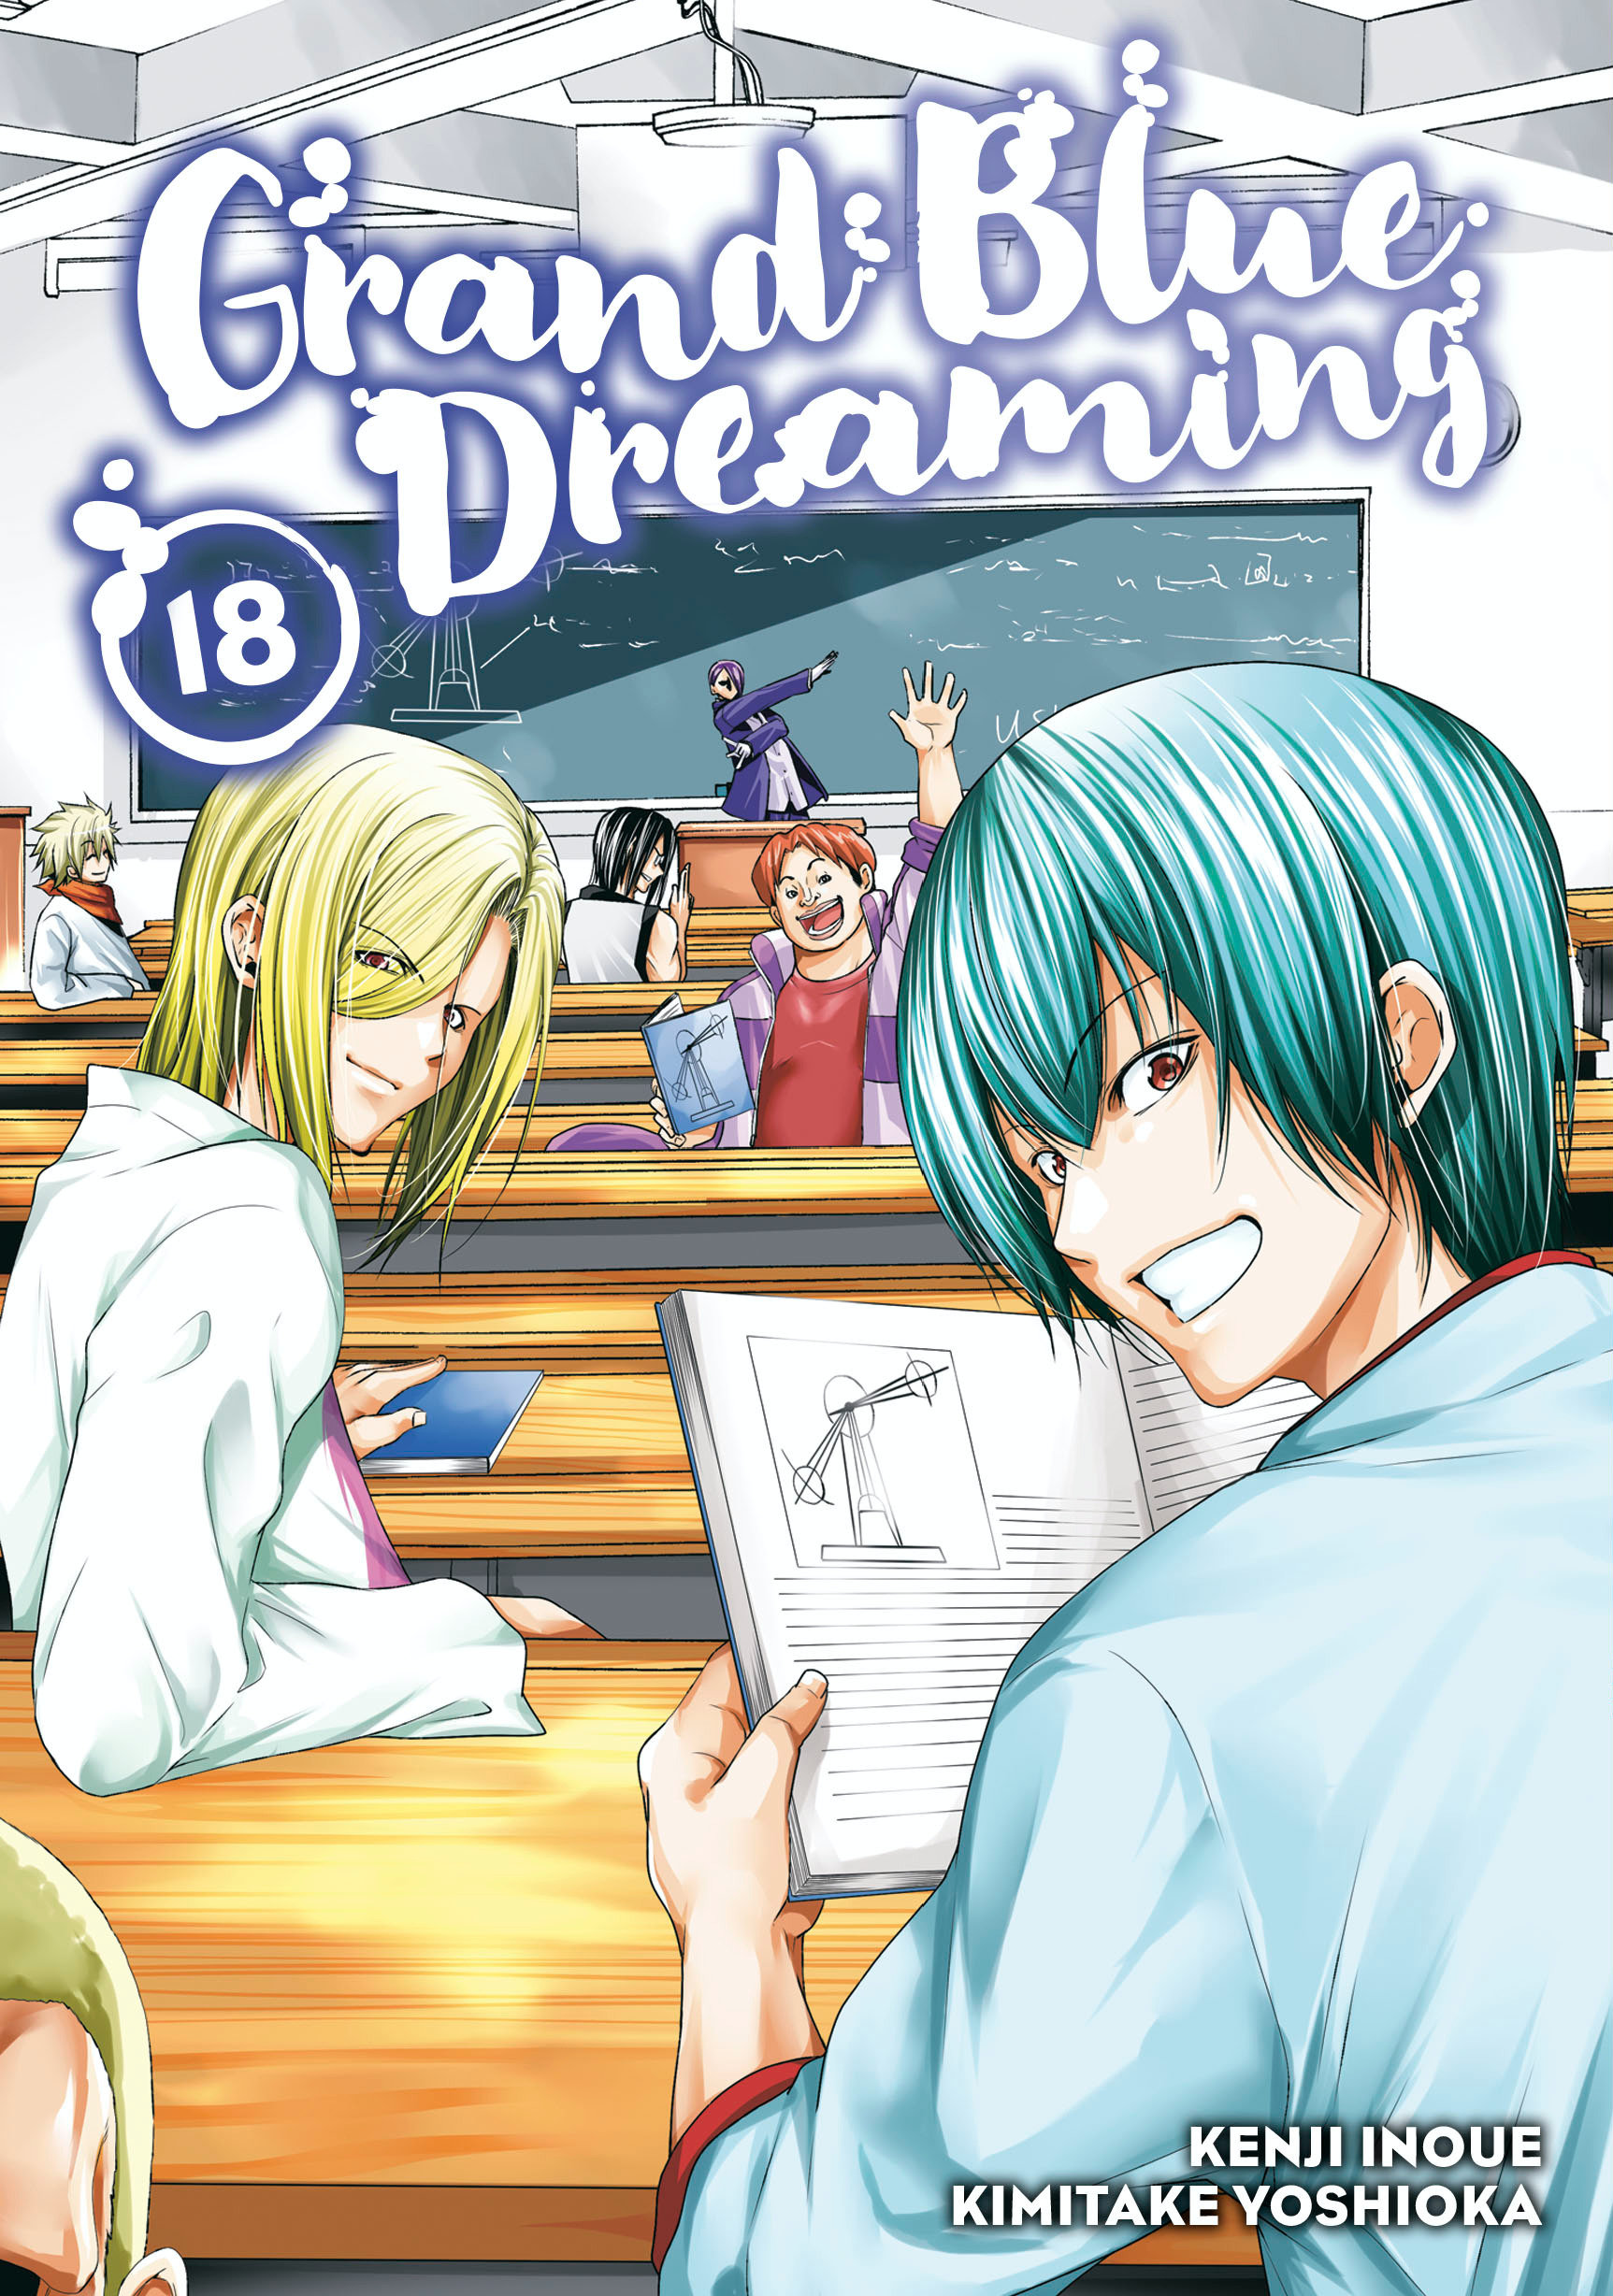 Grand Blue Dreaming Manga Volume 18 (Mature)